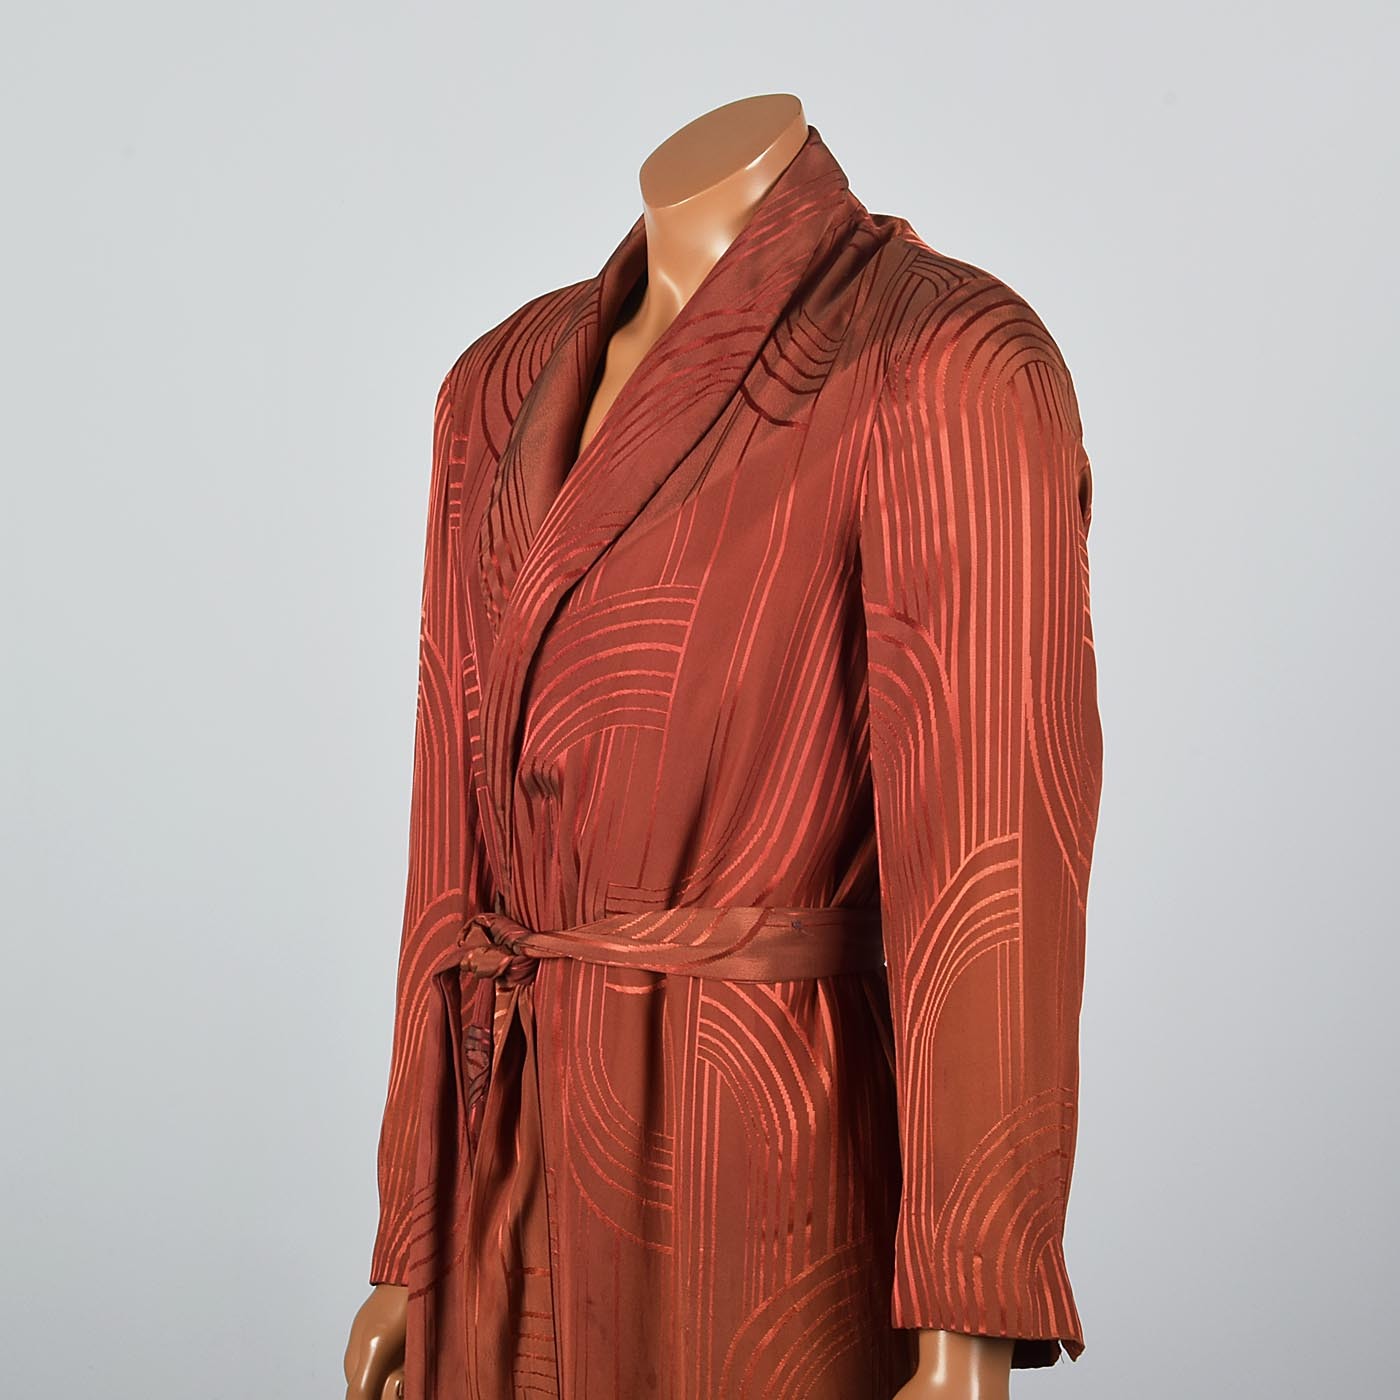 1930s Men's Art Deco Robe